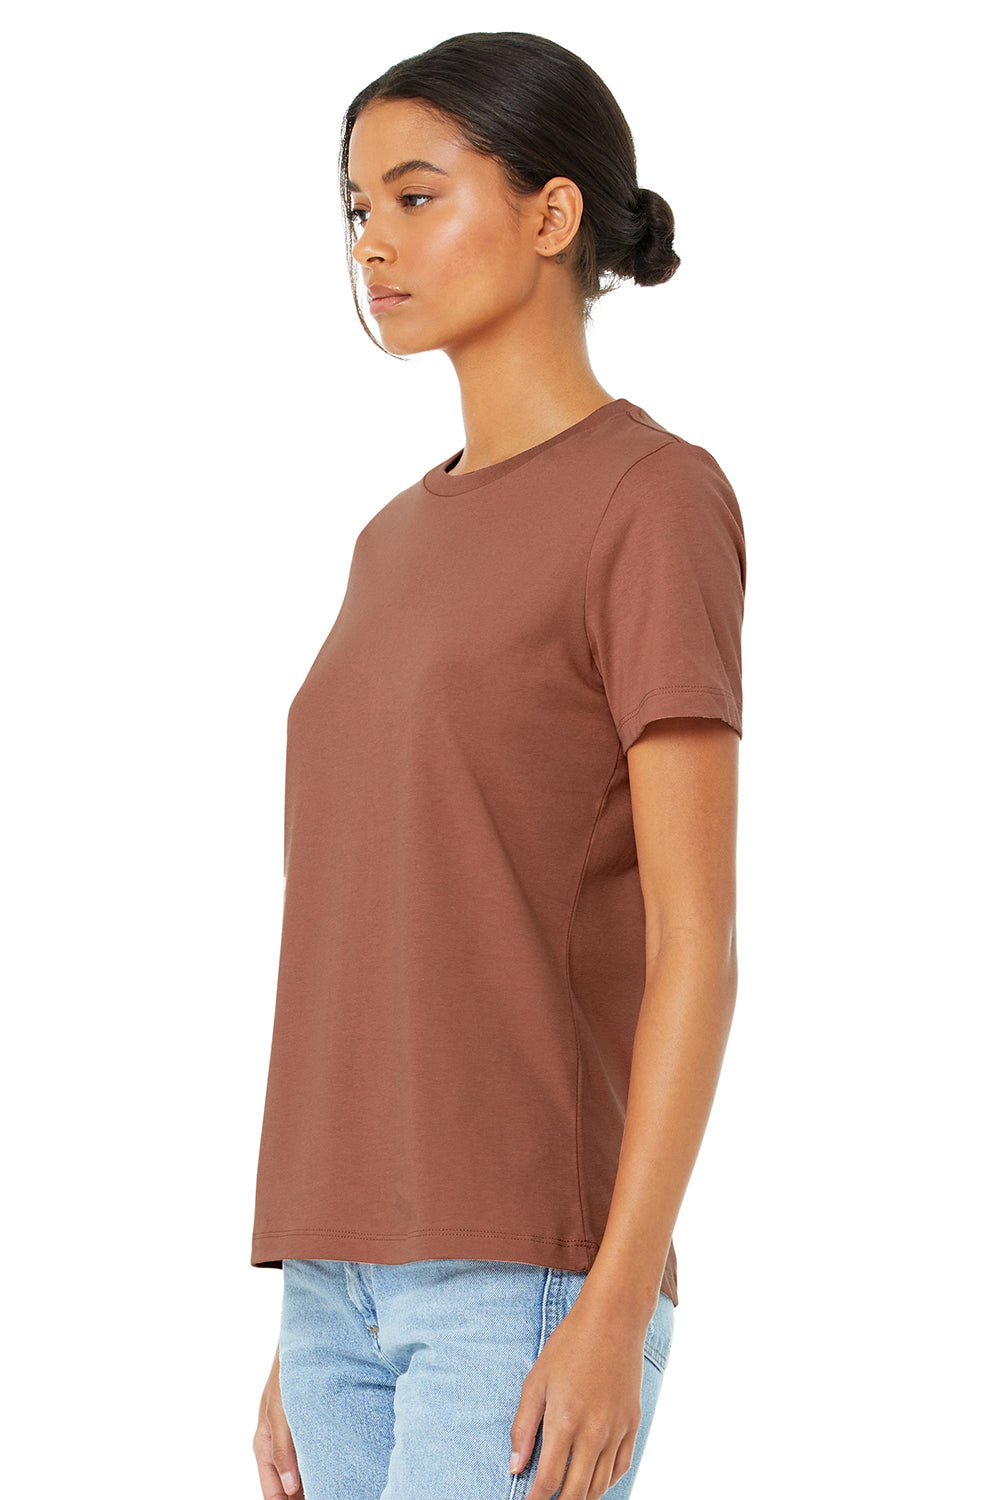 Bella + Canvas BC6400/B6400/6400 Womens Relaxed Jersey Short Sleeve Crewneck T-Shirt Terracotta Model 3Q